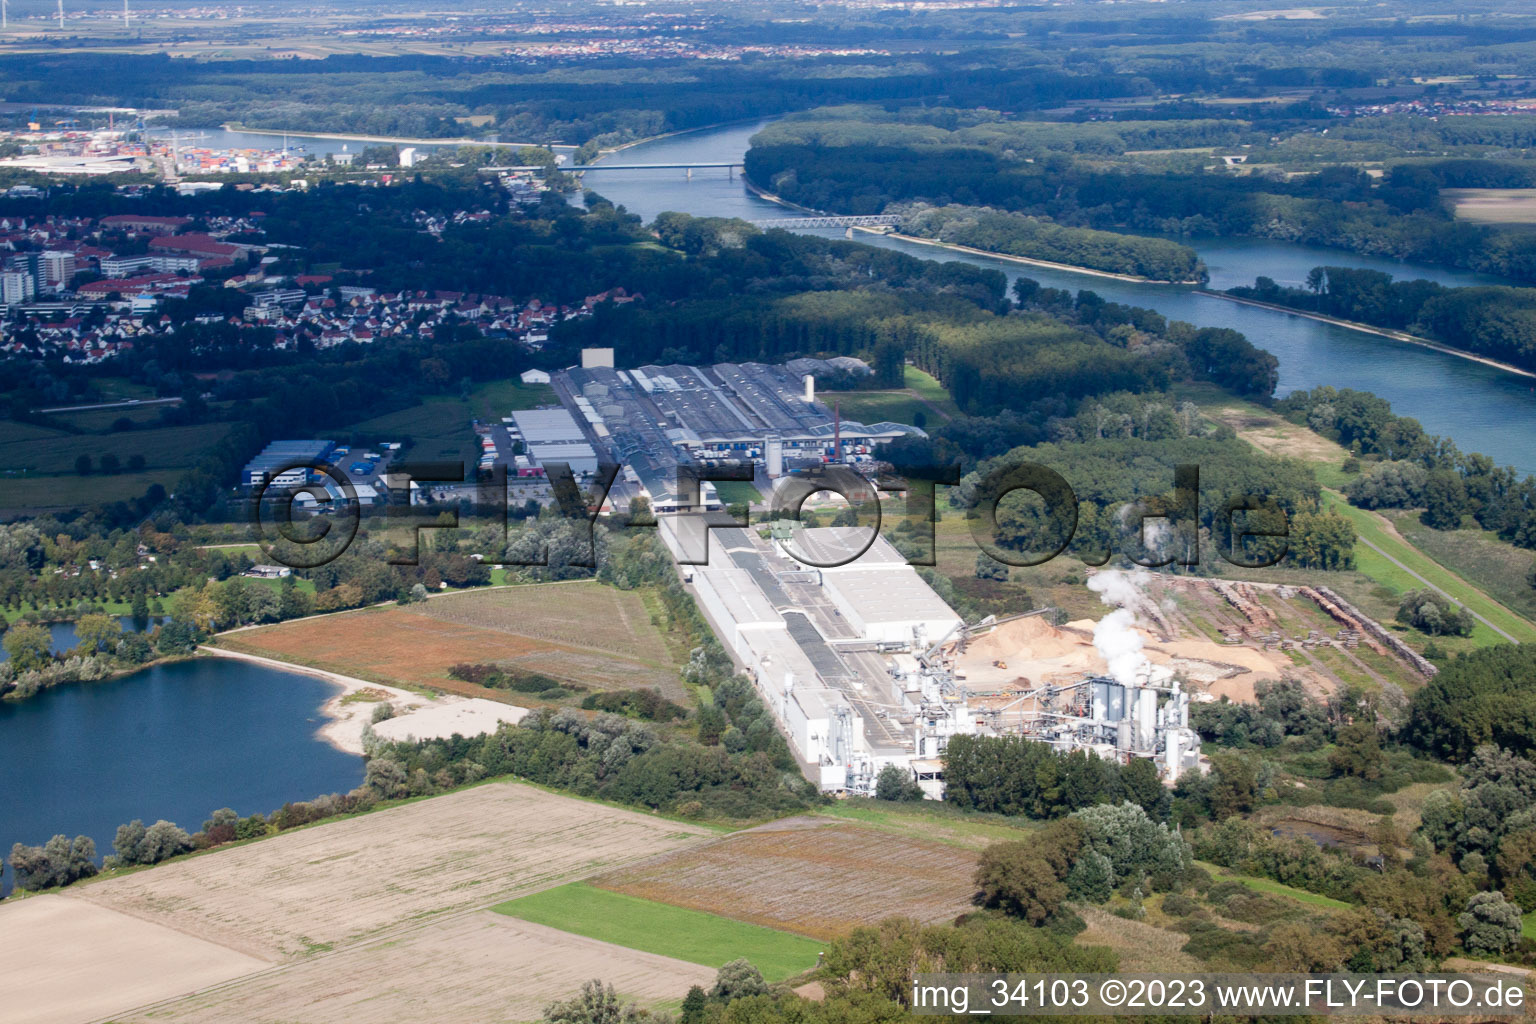 Drone recording of Nolte-Möbel/Holzwerk GmbH in Germersheim in the state Rhineland-Palatinate, Germany